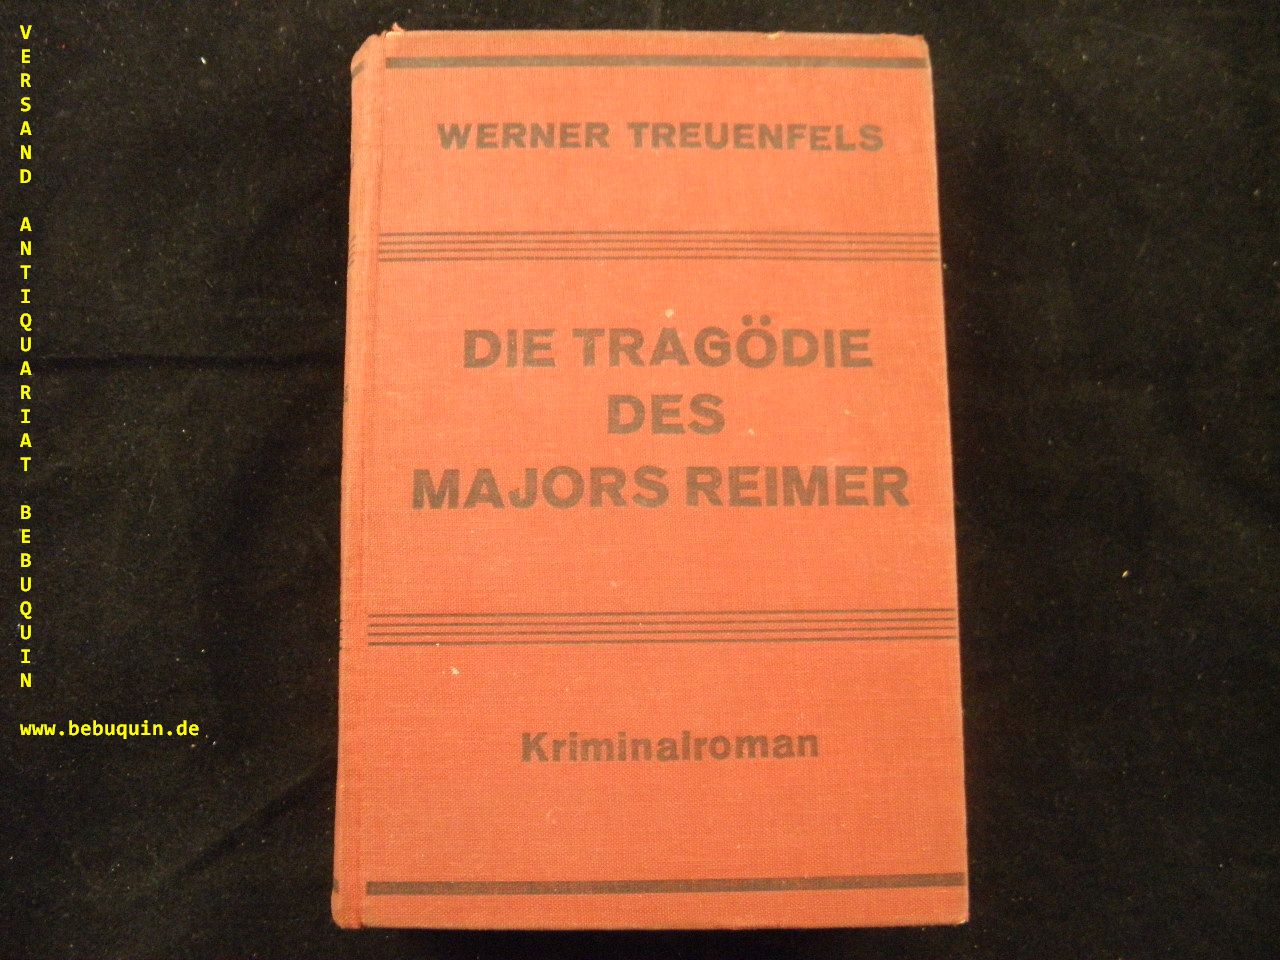 TREUENFELS, Werner: - Die Tragdie des Majors Reimer. Kriminalroman.